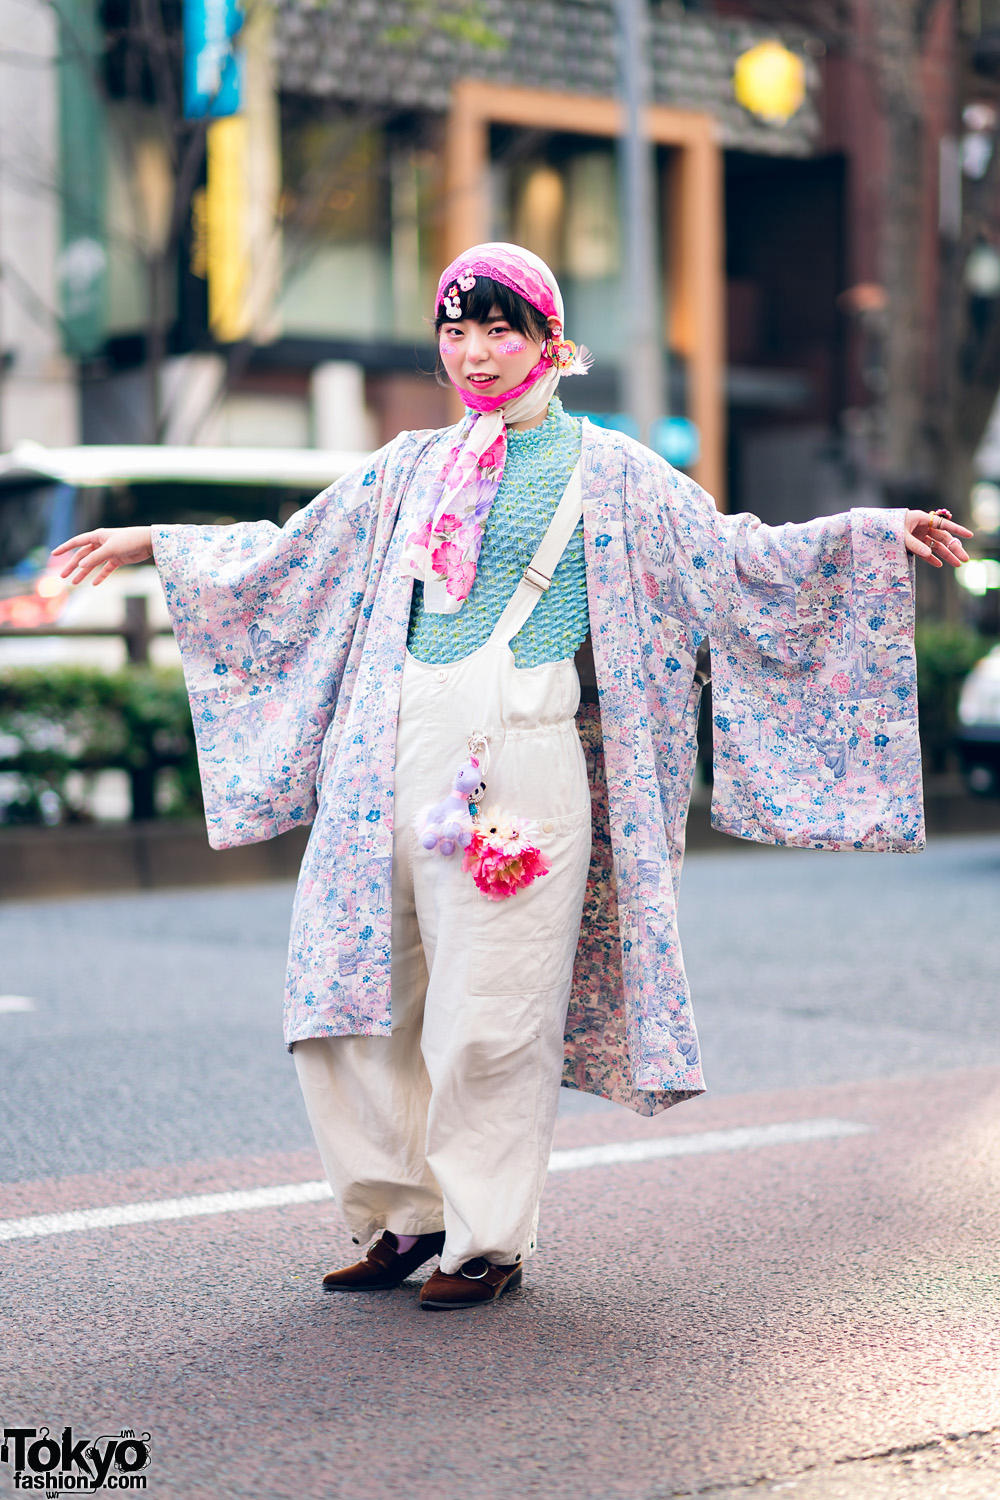 Sakura Kimono Streetwear Style in Harajuku w/ Headscarves, Glitter Makeup, Popcorn Pleat Top, W Closet Overalls, Sling Bag & Oriental Traffic Suede Loafers